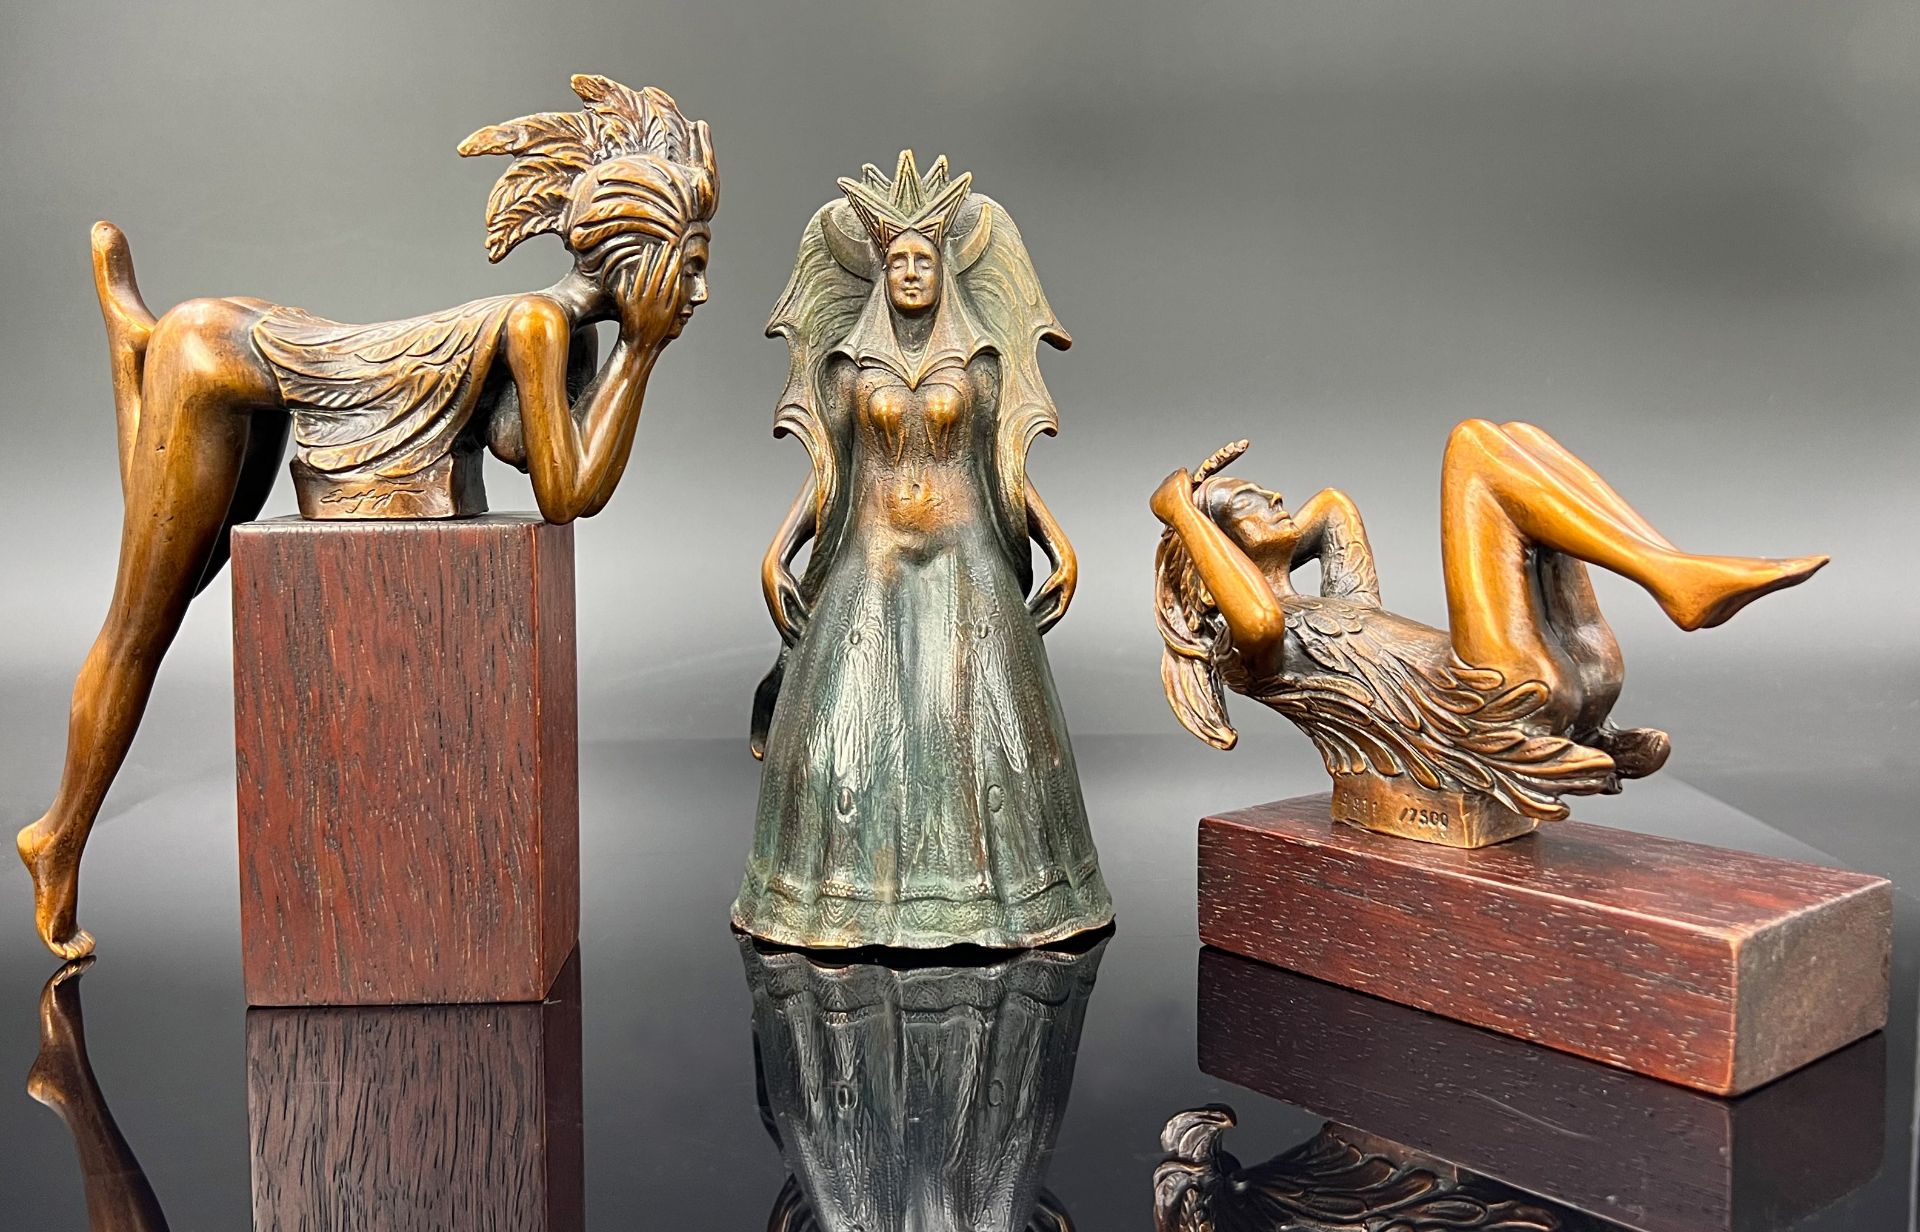 Ernst FUCHS (1930 - 2015). 3 bronzes. "The Magic Flute".